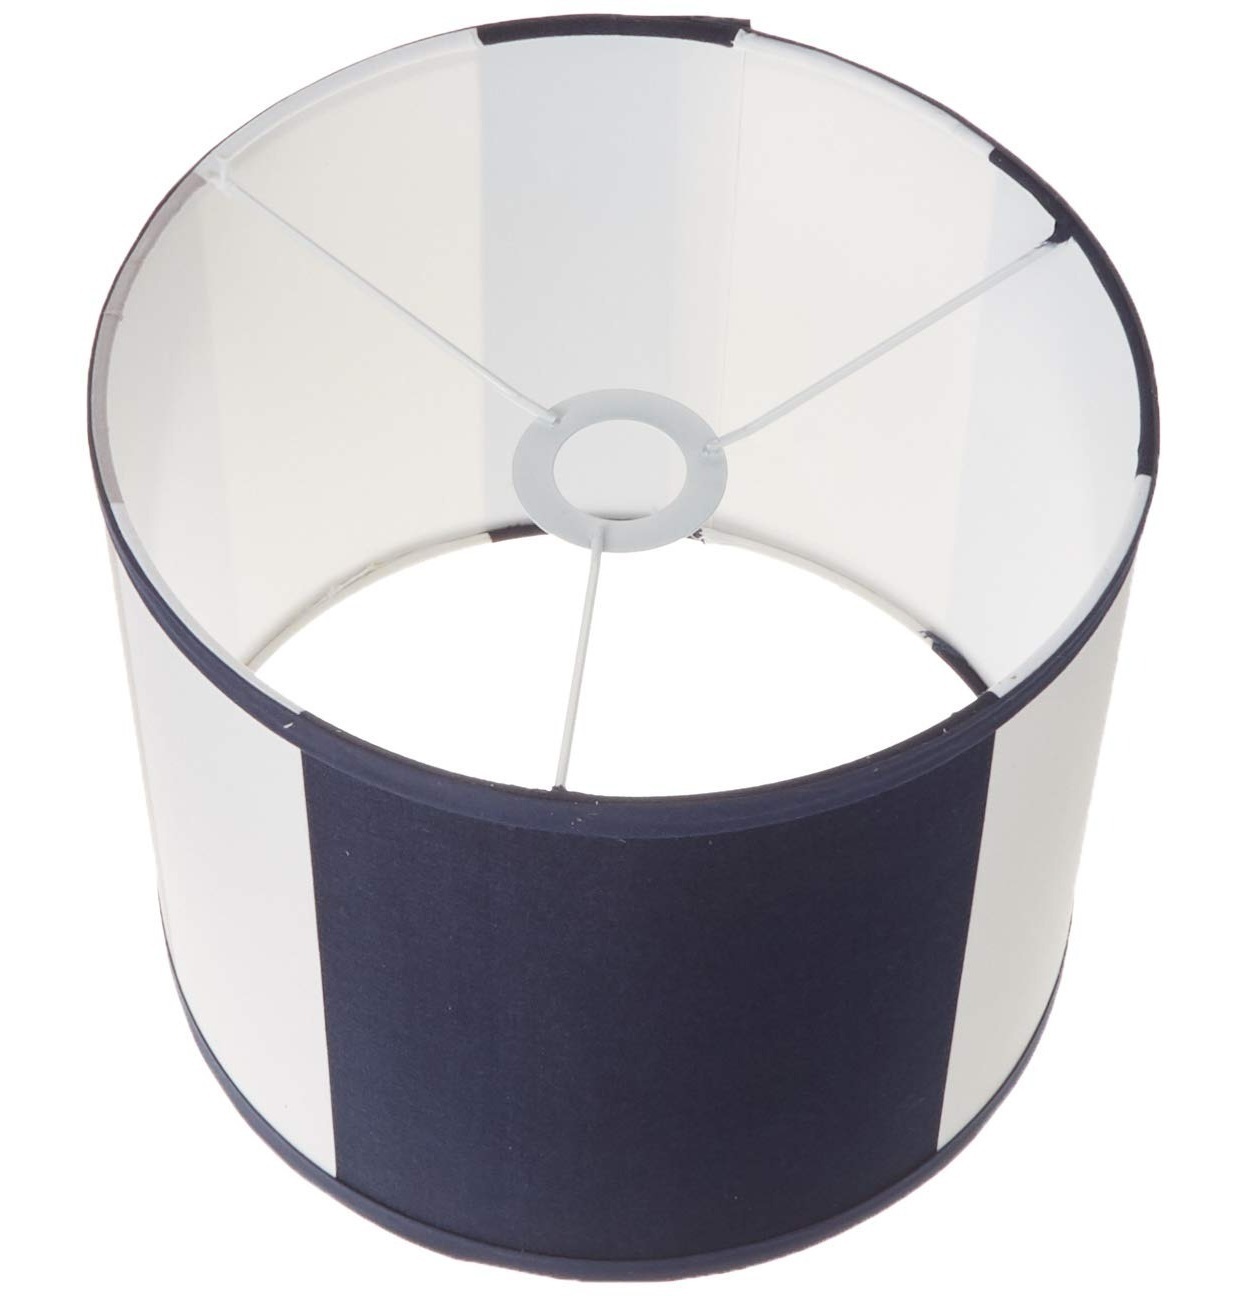 Neutral Vertical Striped Drum Lamp Shade